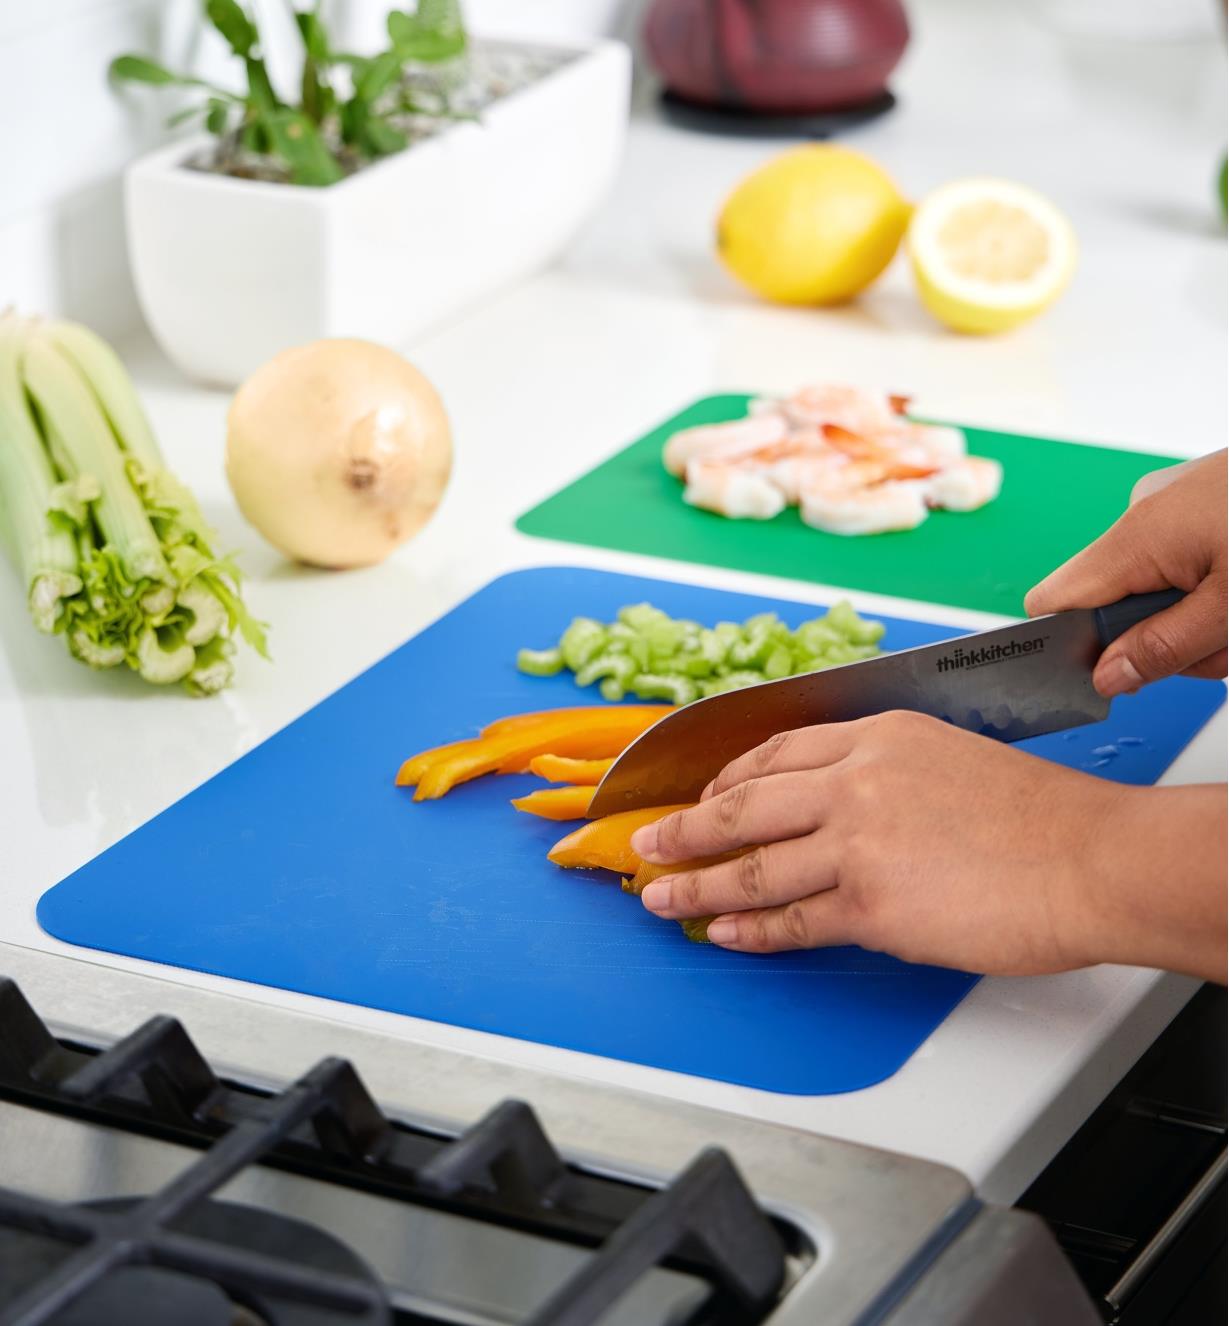 Chopping food items on a flexible cutting mat